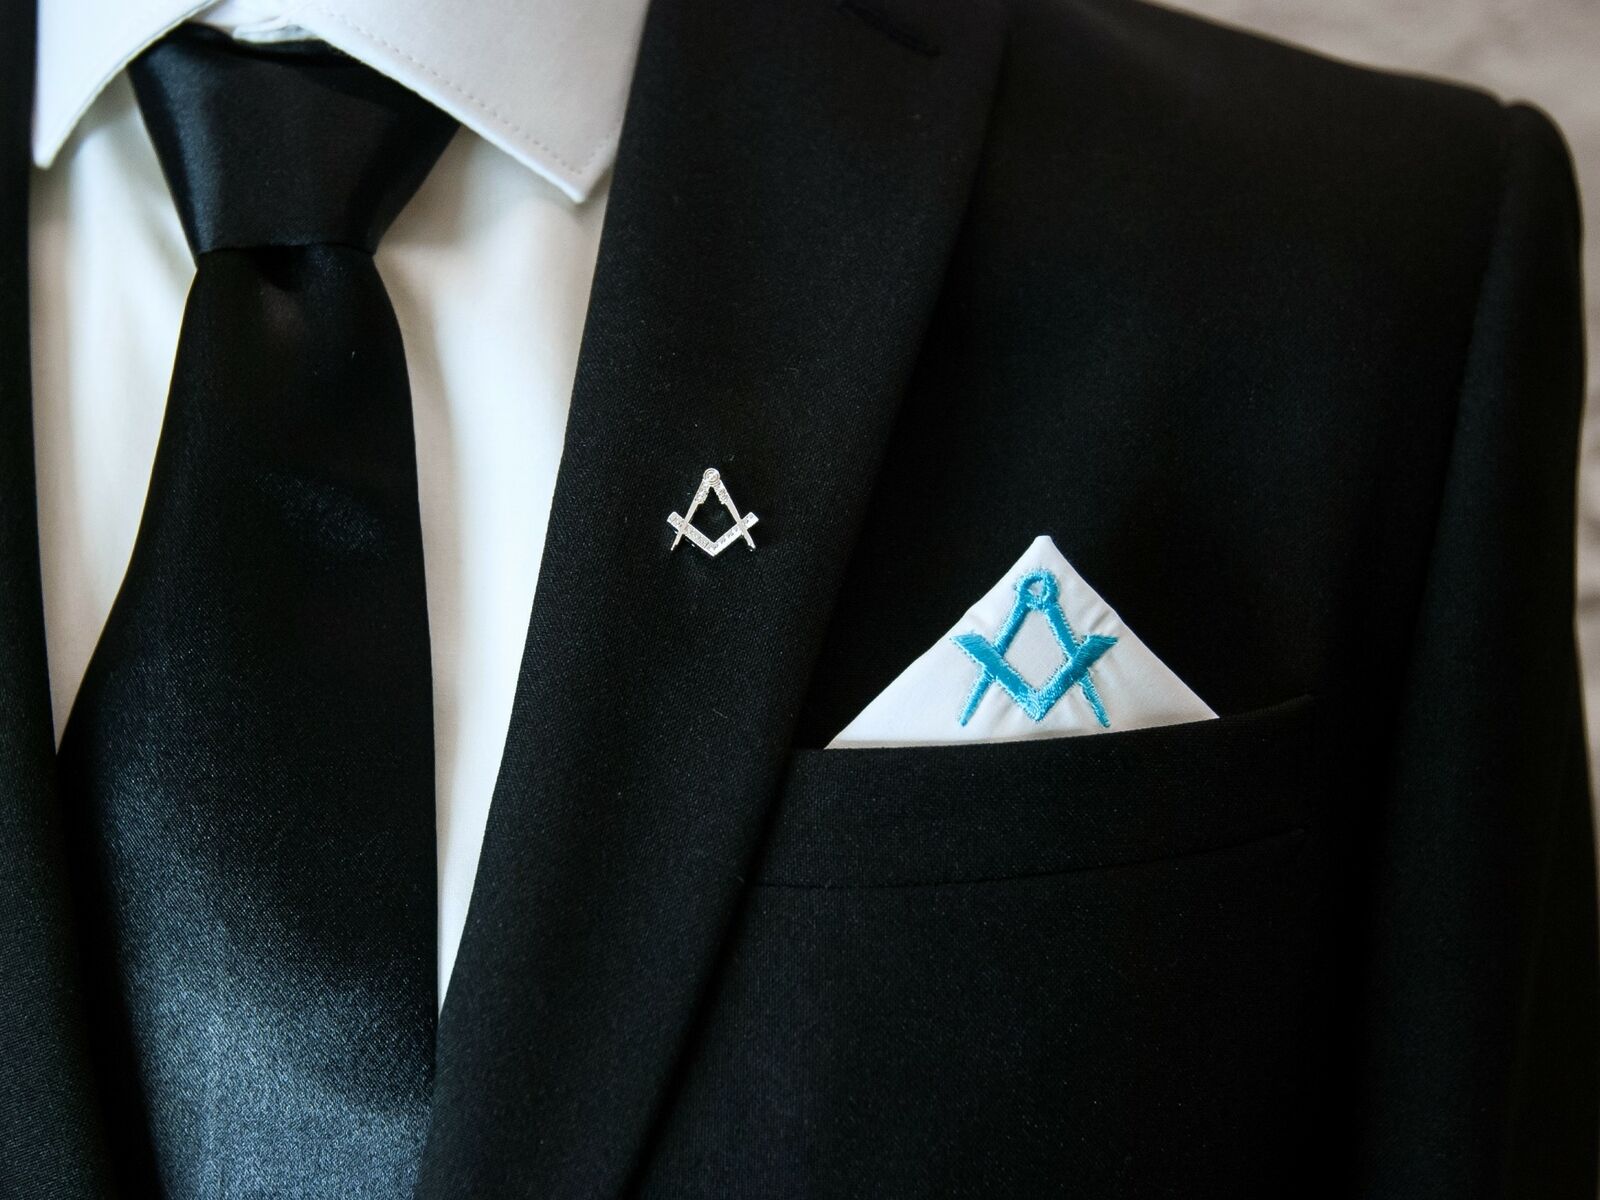 Masonic Plain White Pocket Square with Sky Blue embroidered Freemasons S&C